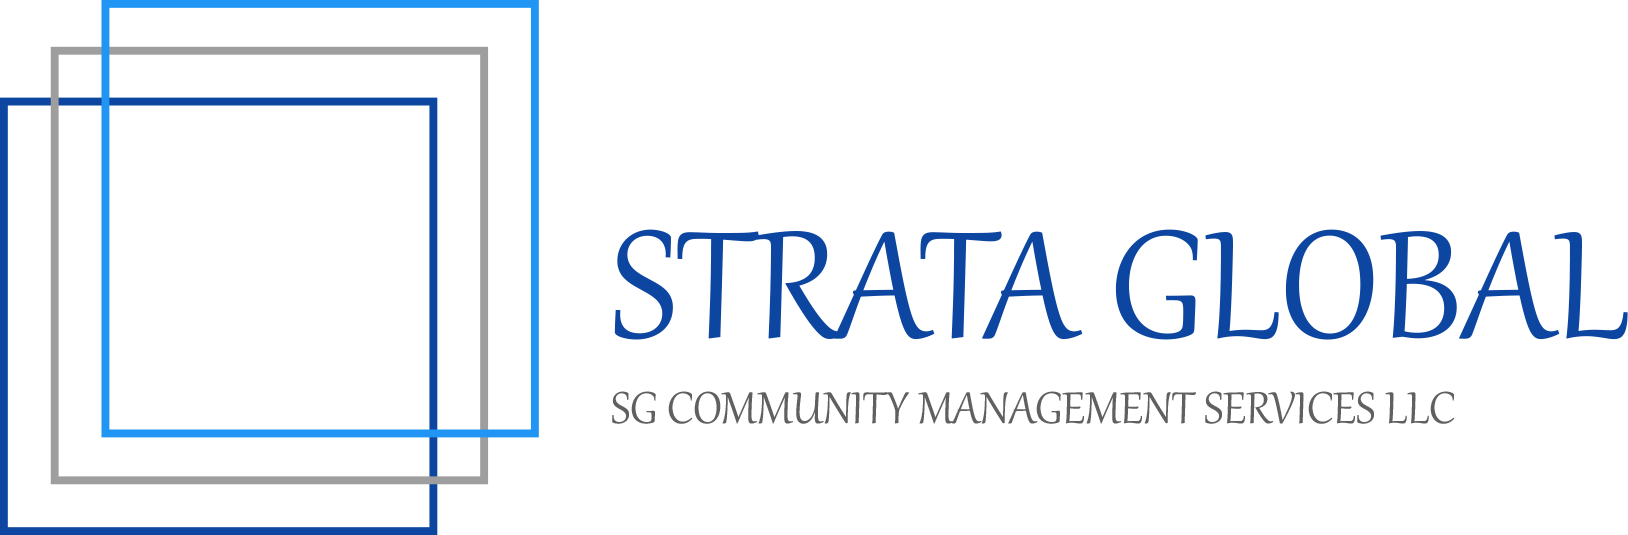 Strata Global Community Management Services